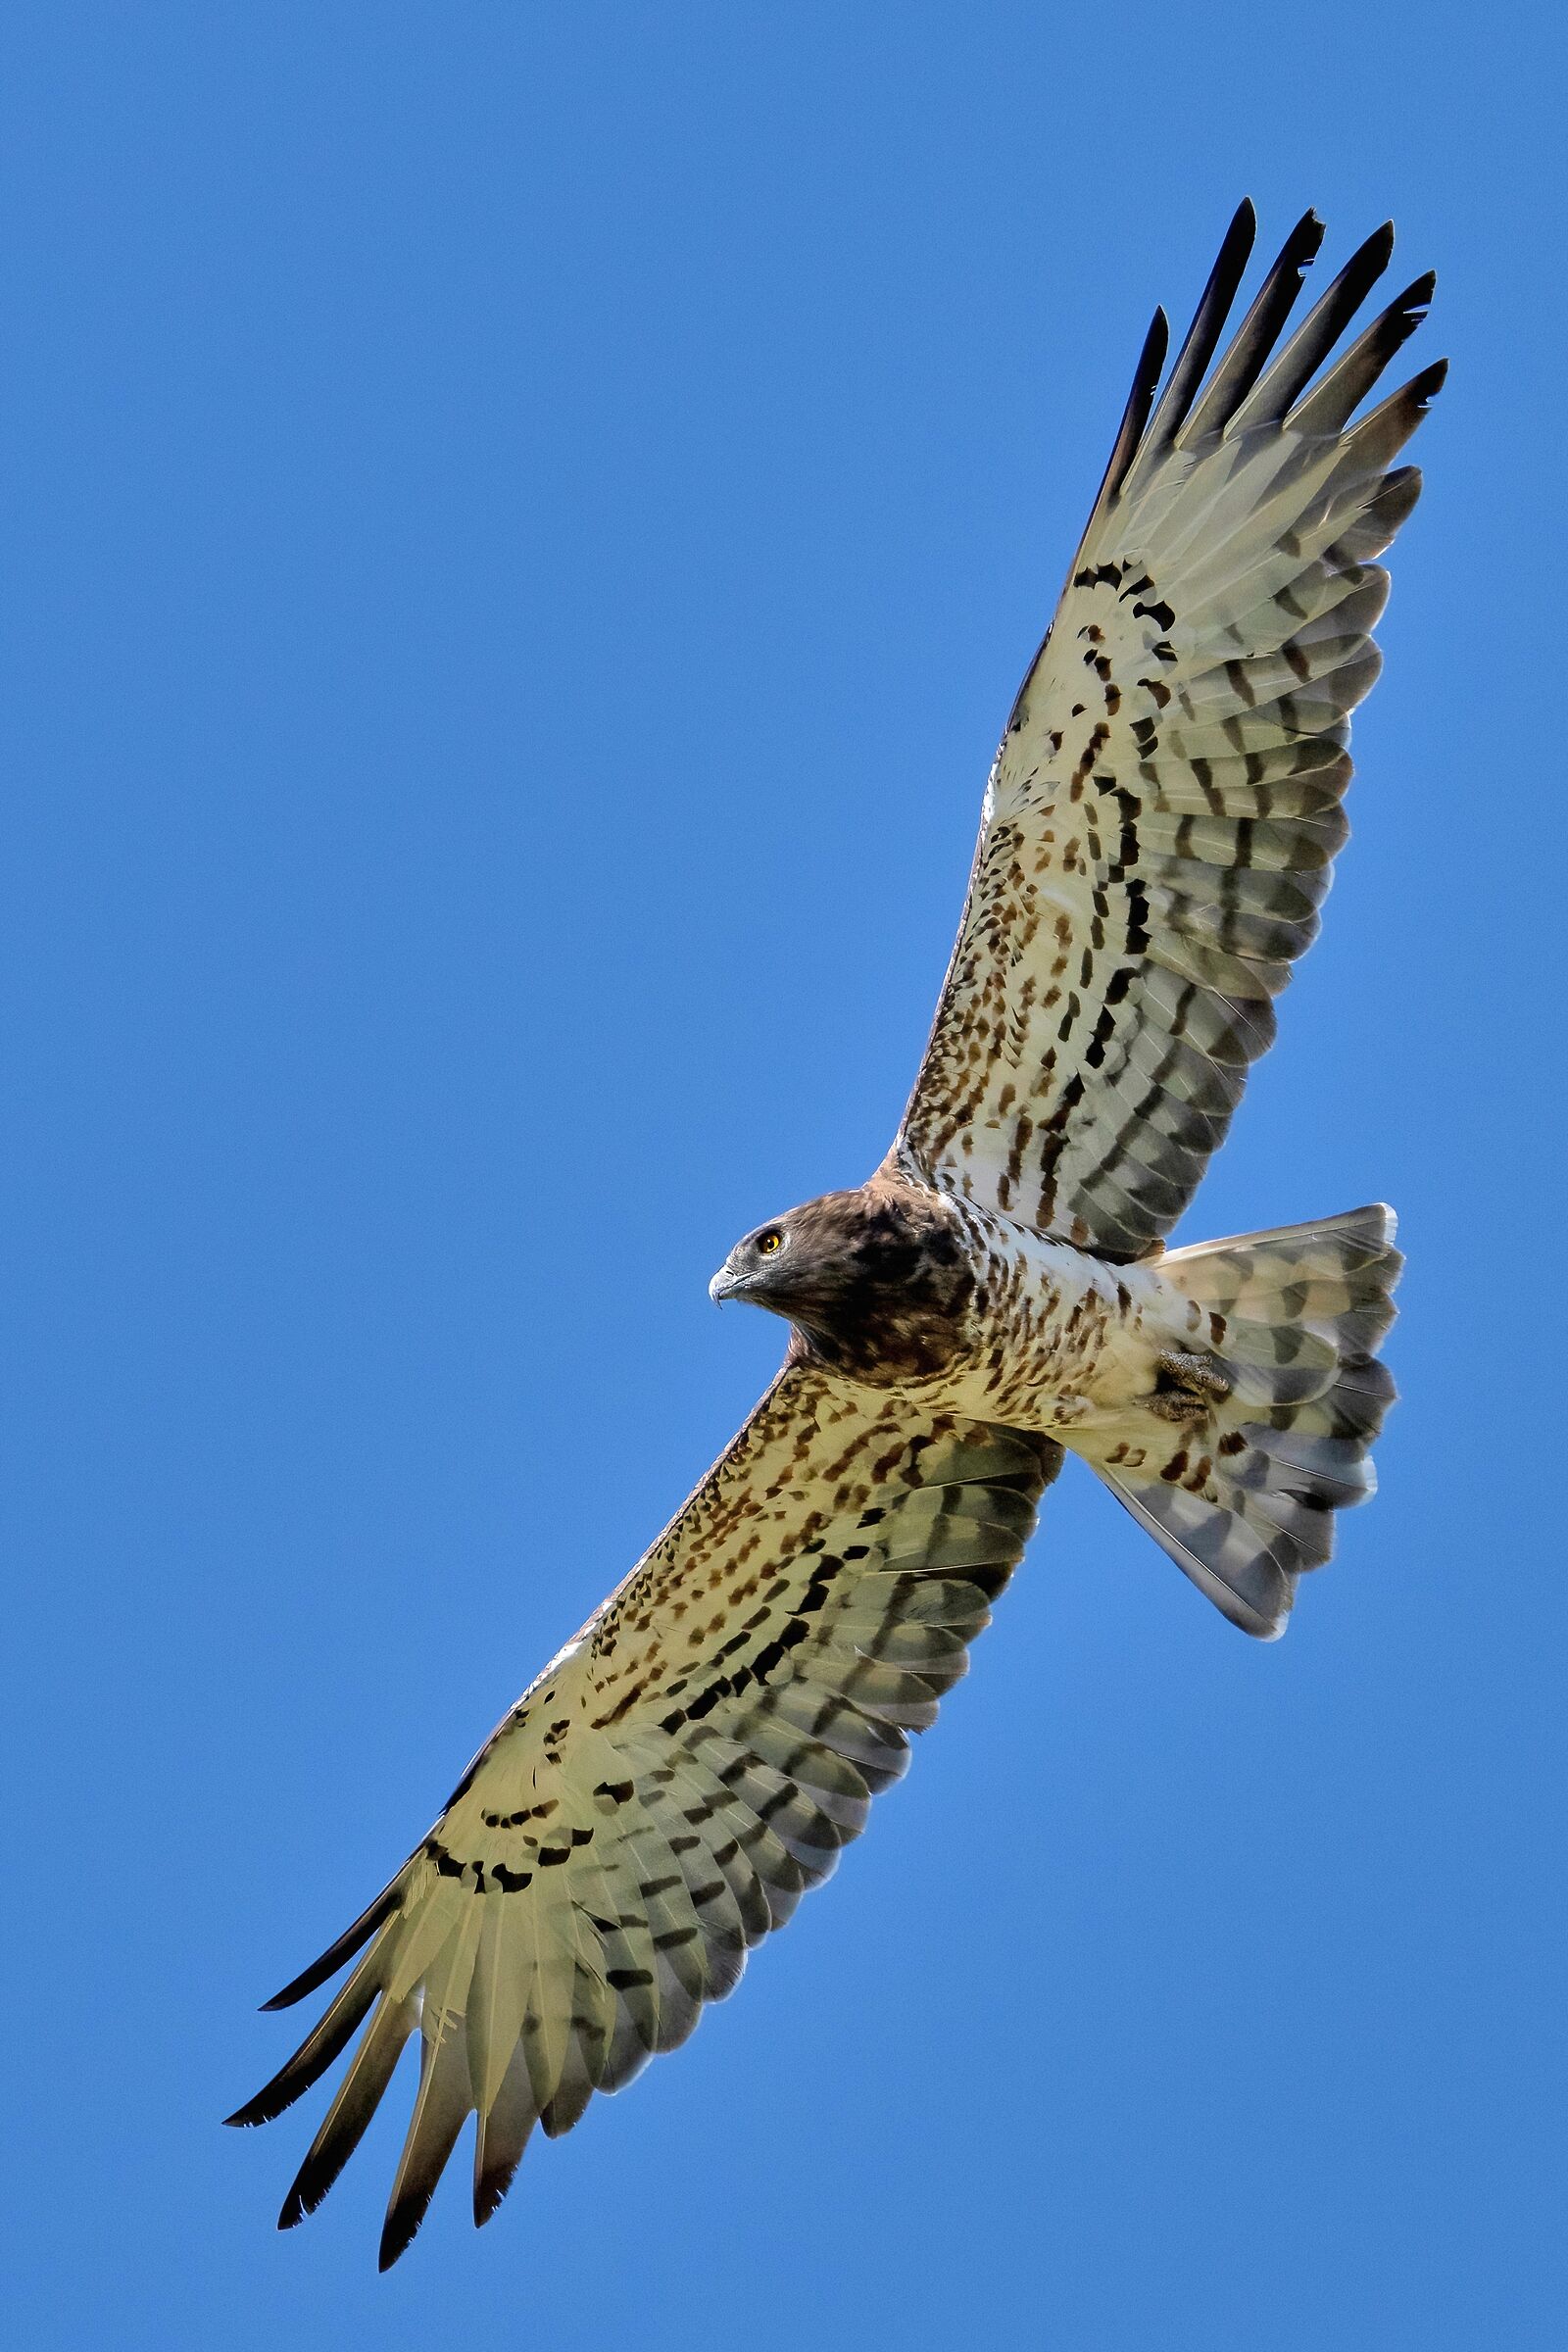 Short-toed eagle or Snake eagle (Circaetus gallicus)...